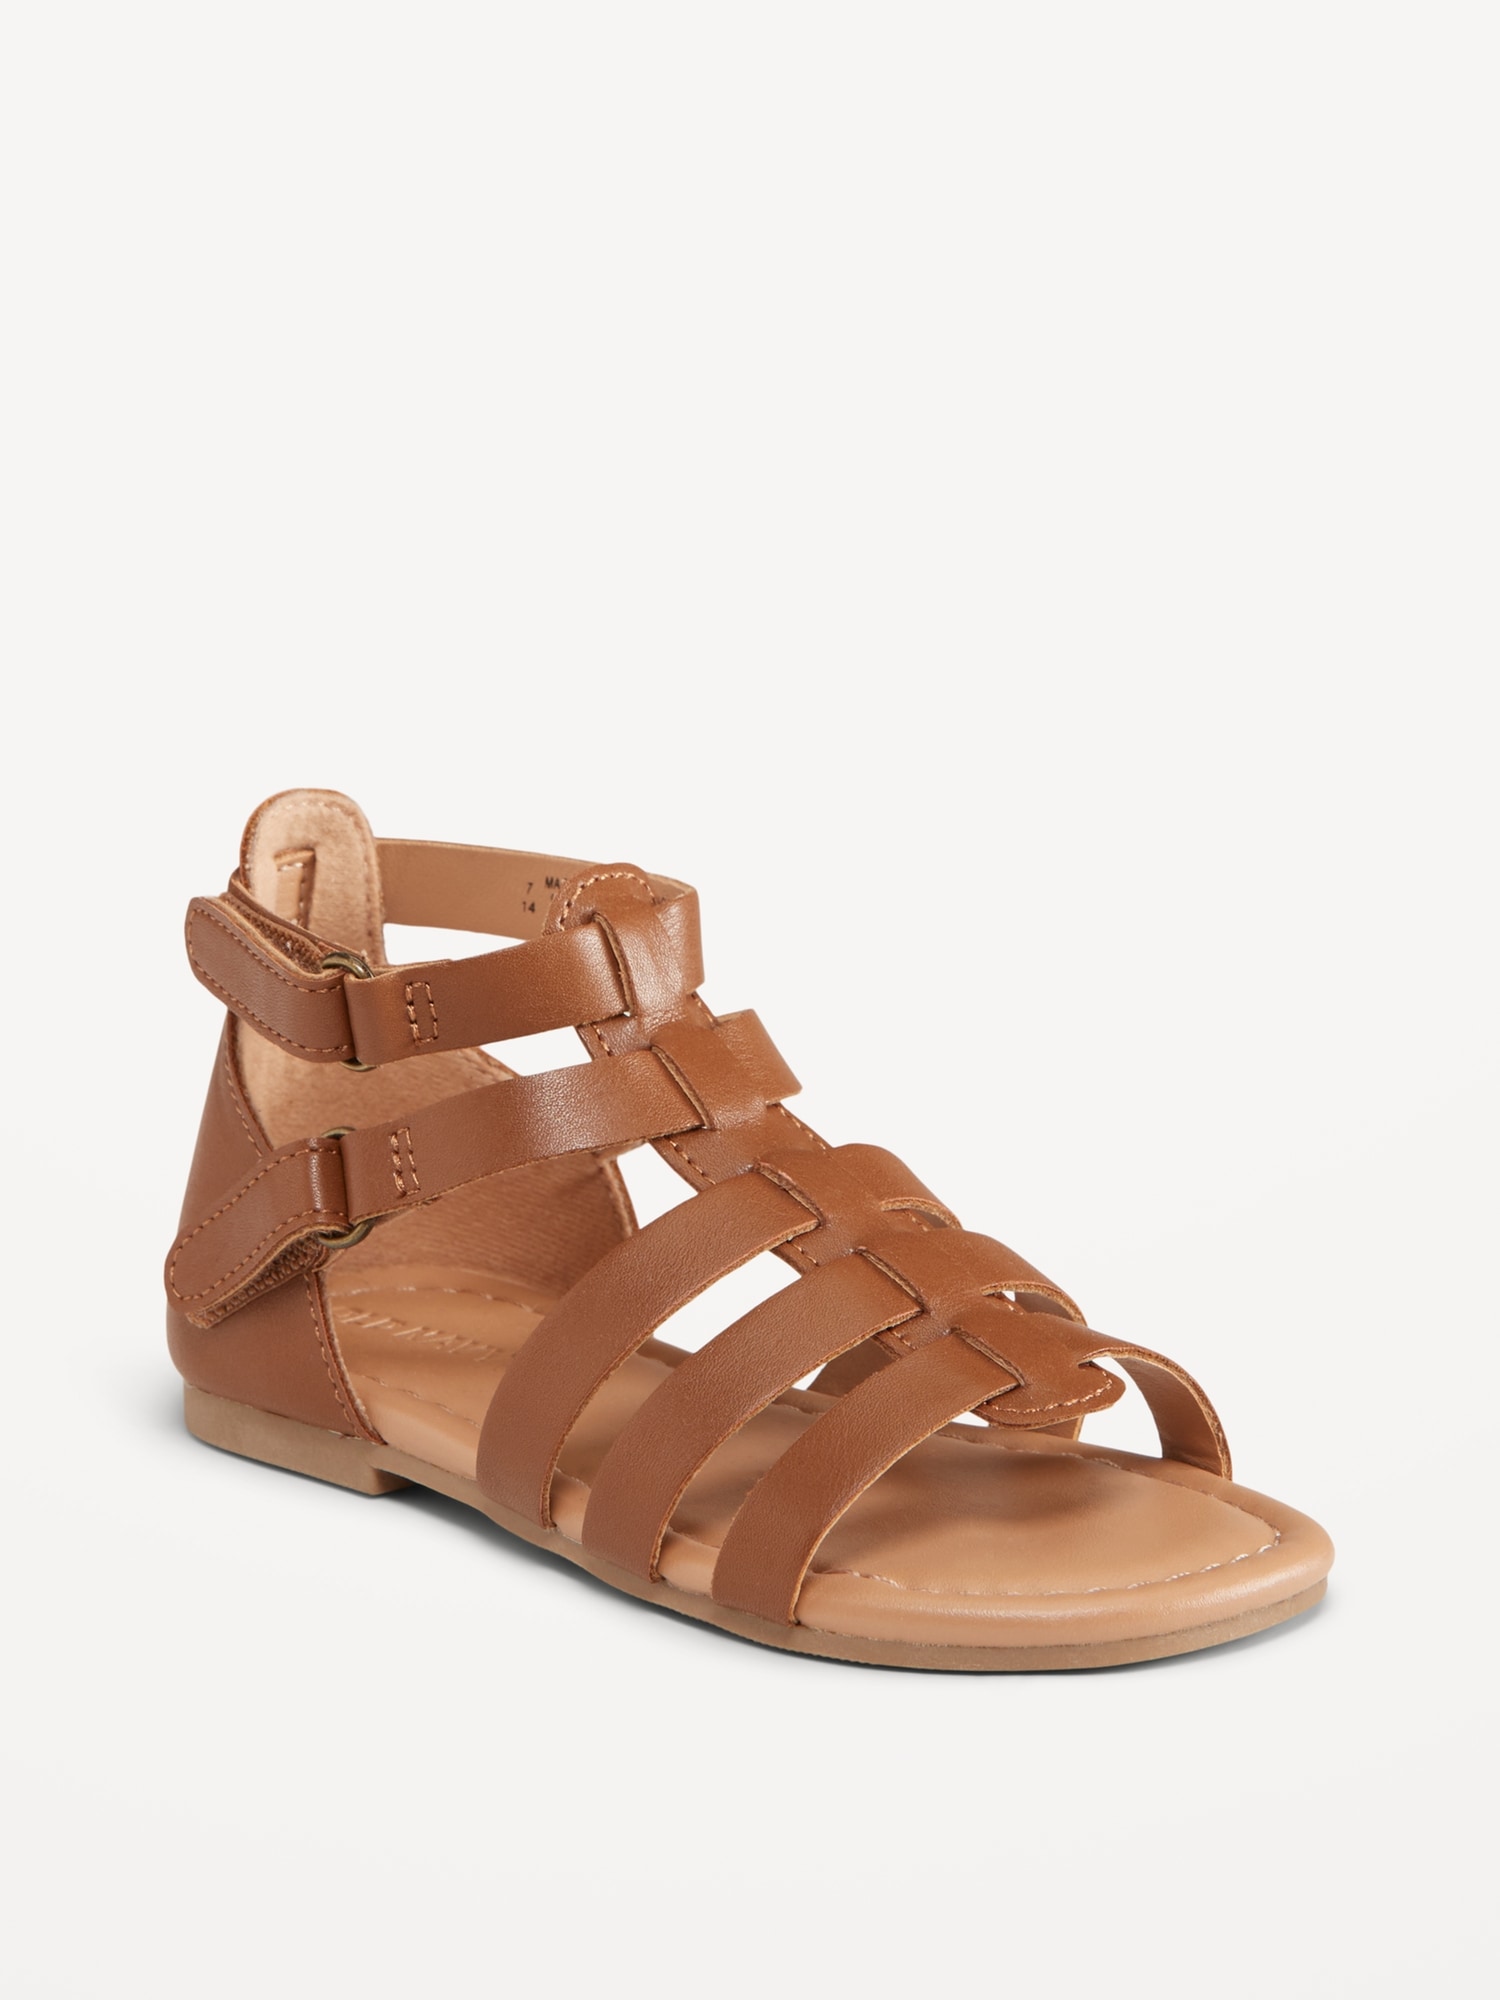 Buy Brown Flat Sandals for Women by Pratap Online | Ajio.com